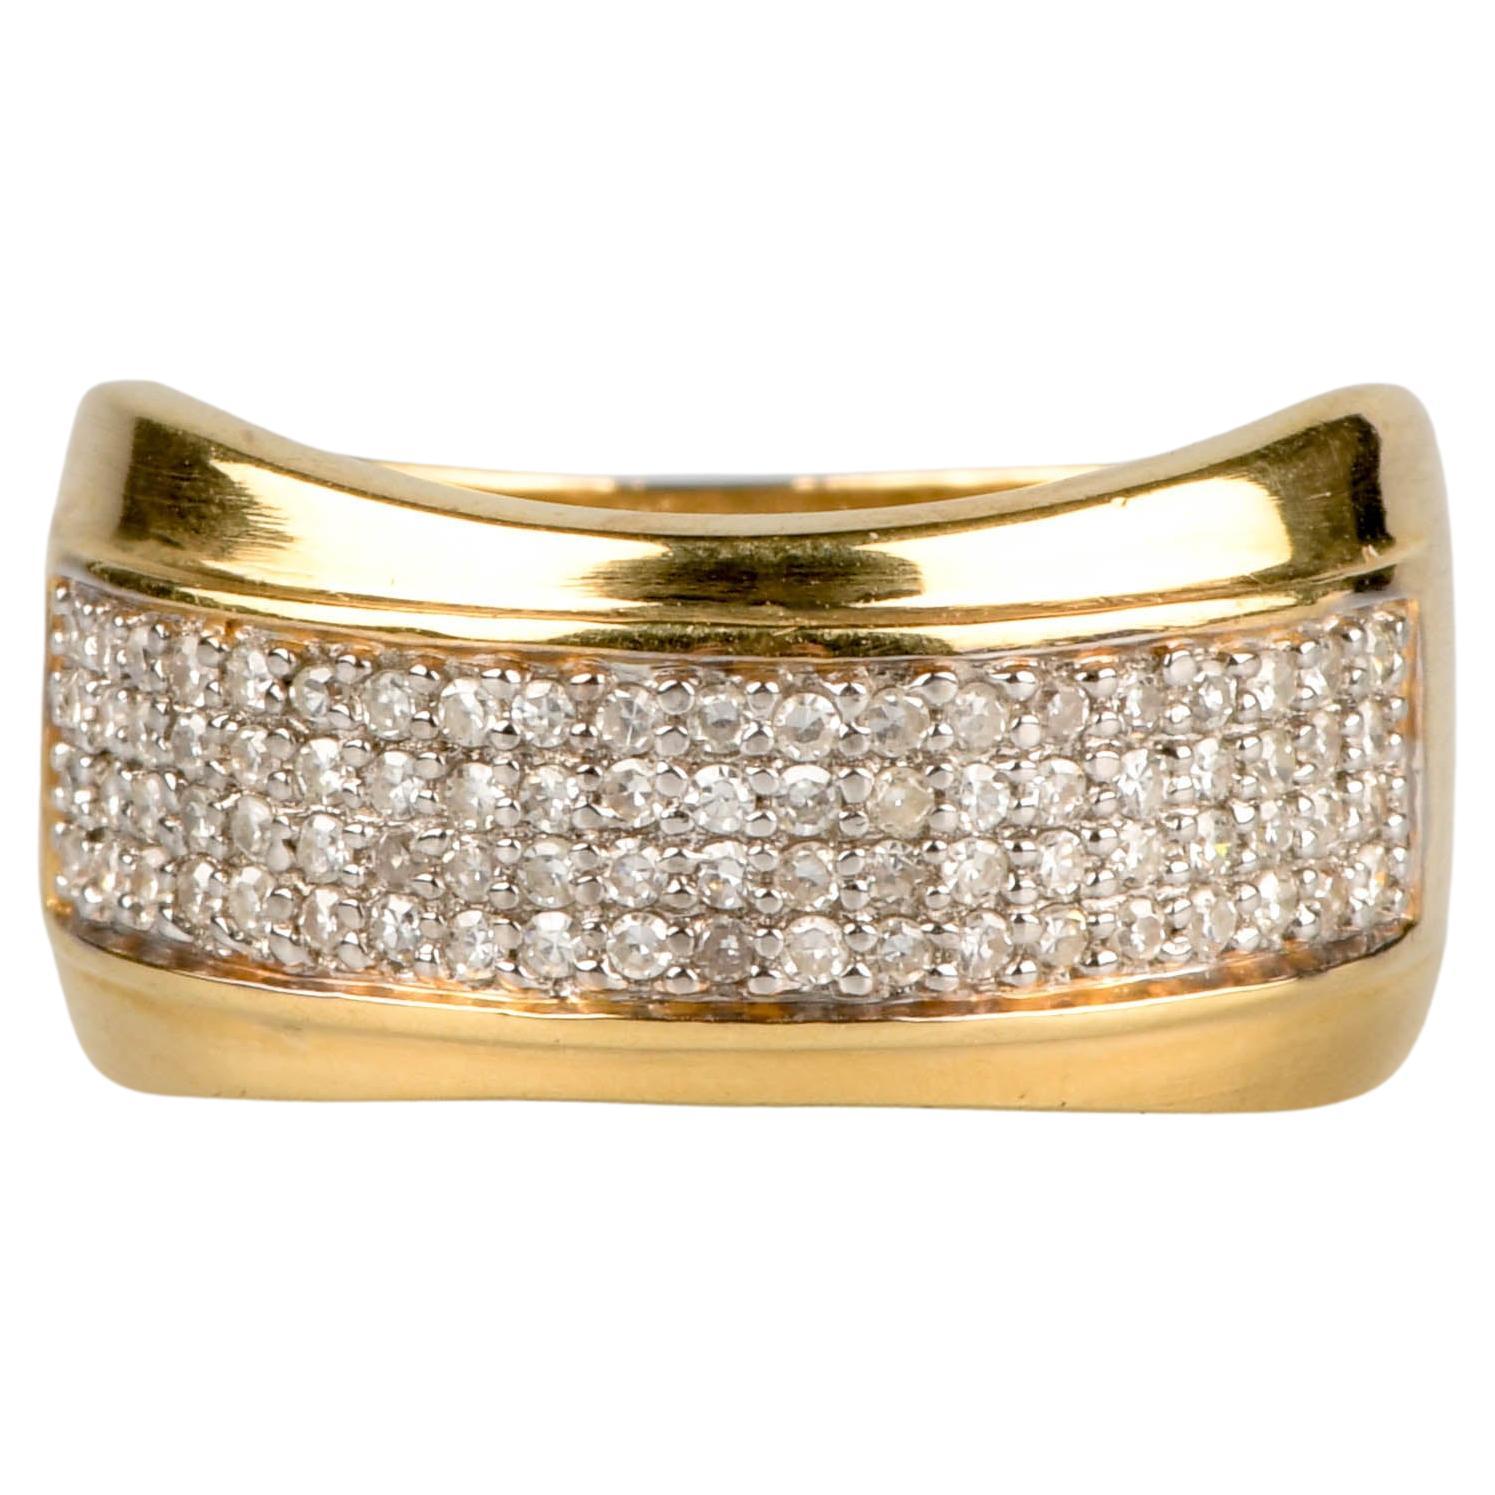 18 carat yellow gold diamonds ring